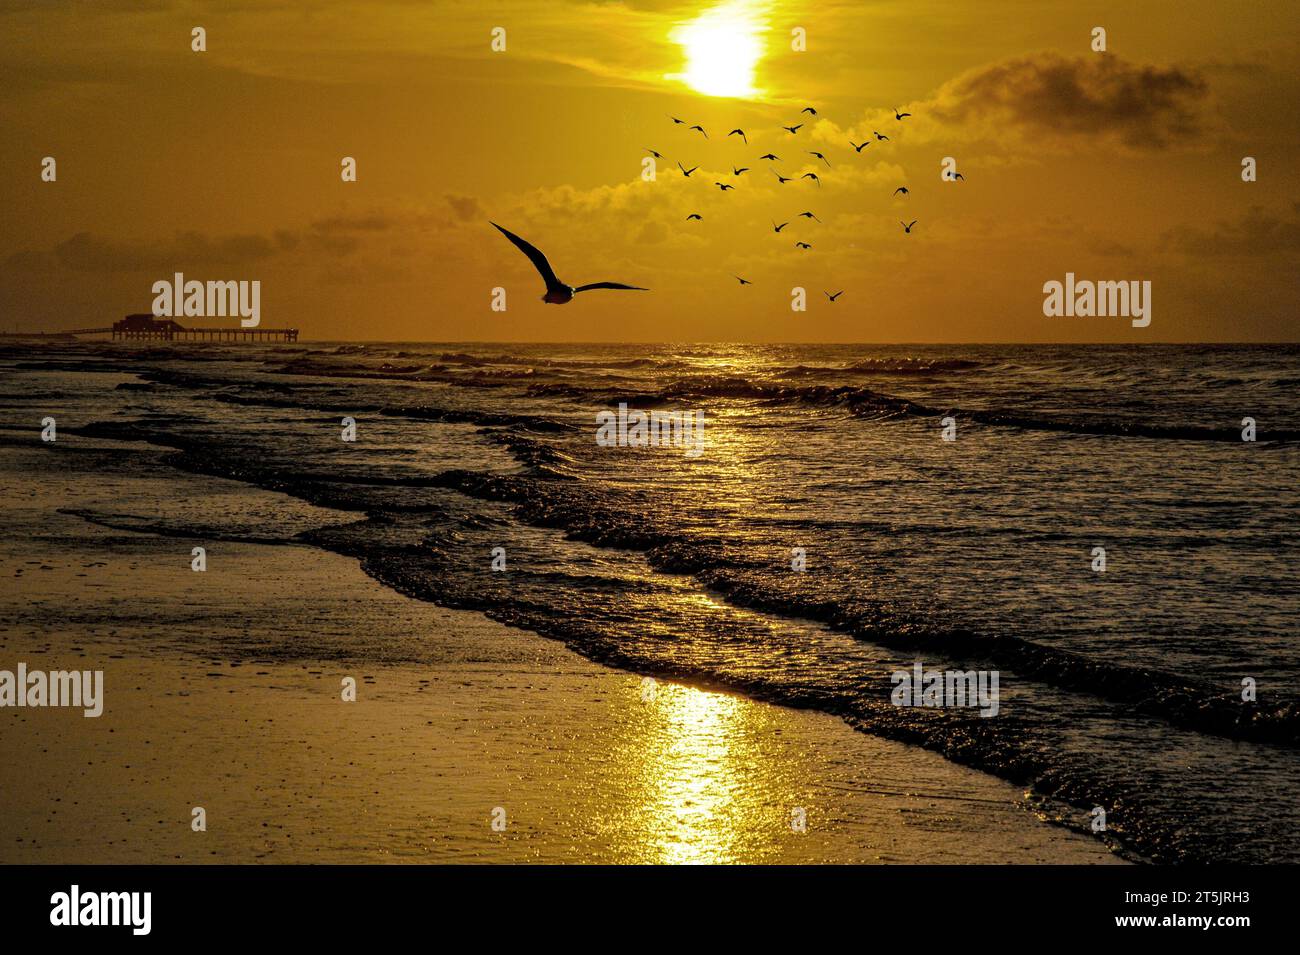 As the slumbering coastal town begins to awaken in the early morning, seagulls soar above Galveston Beach. Stock Photo